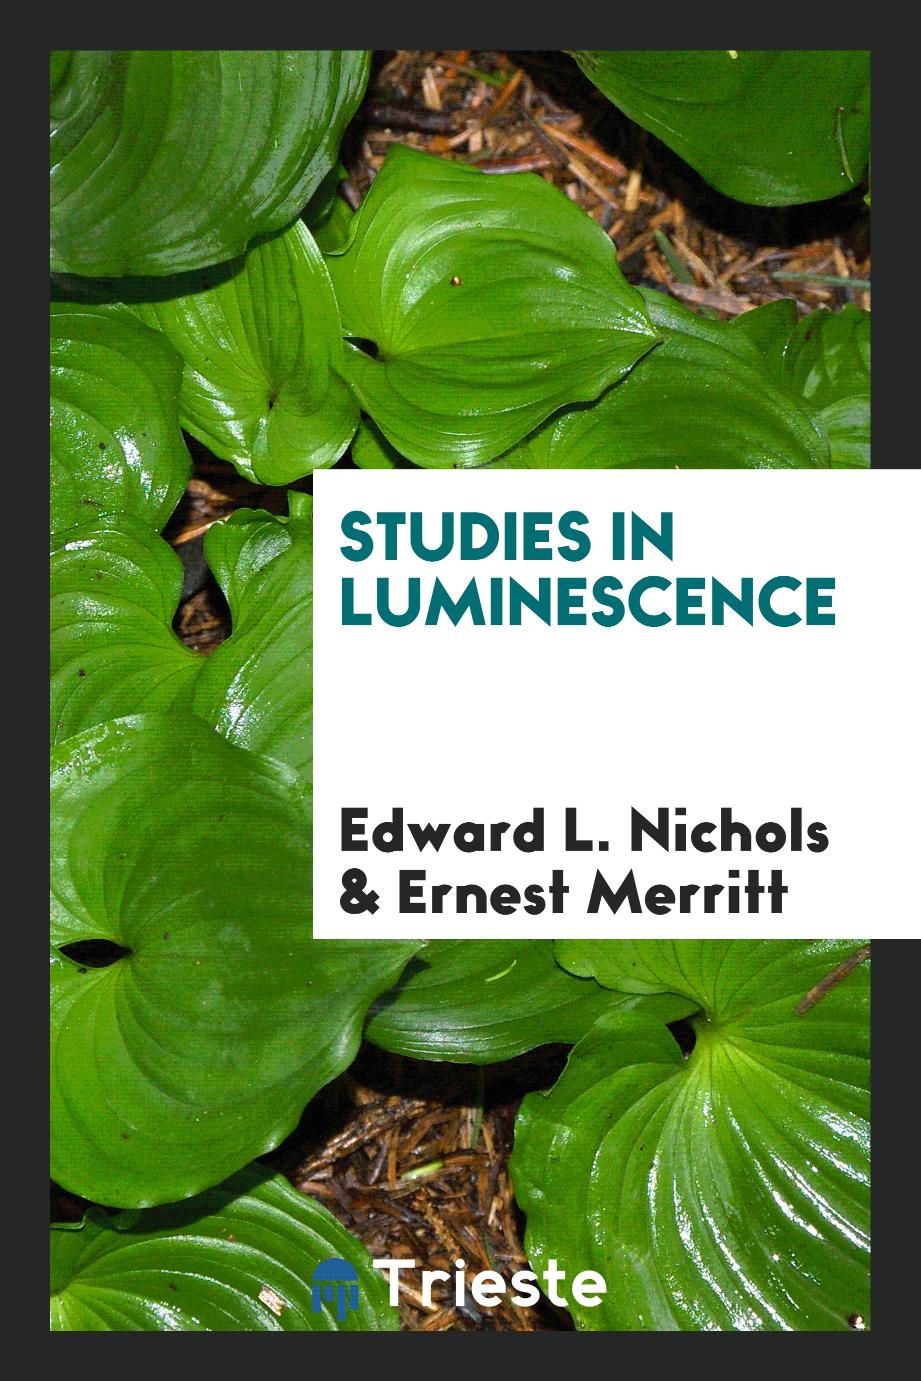 Studies in luminescence